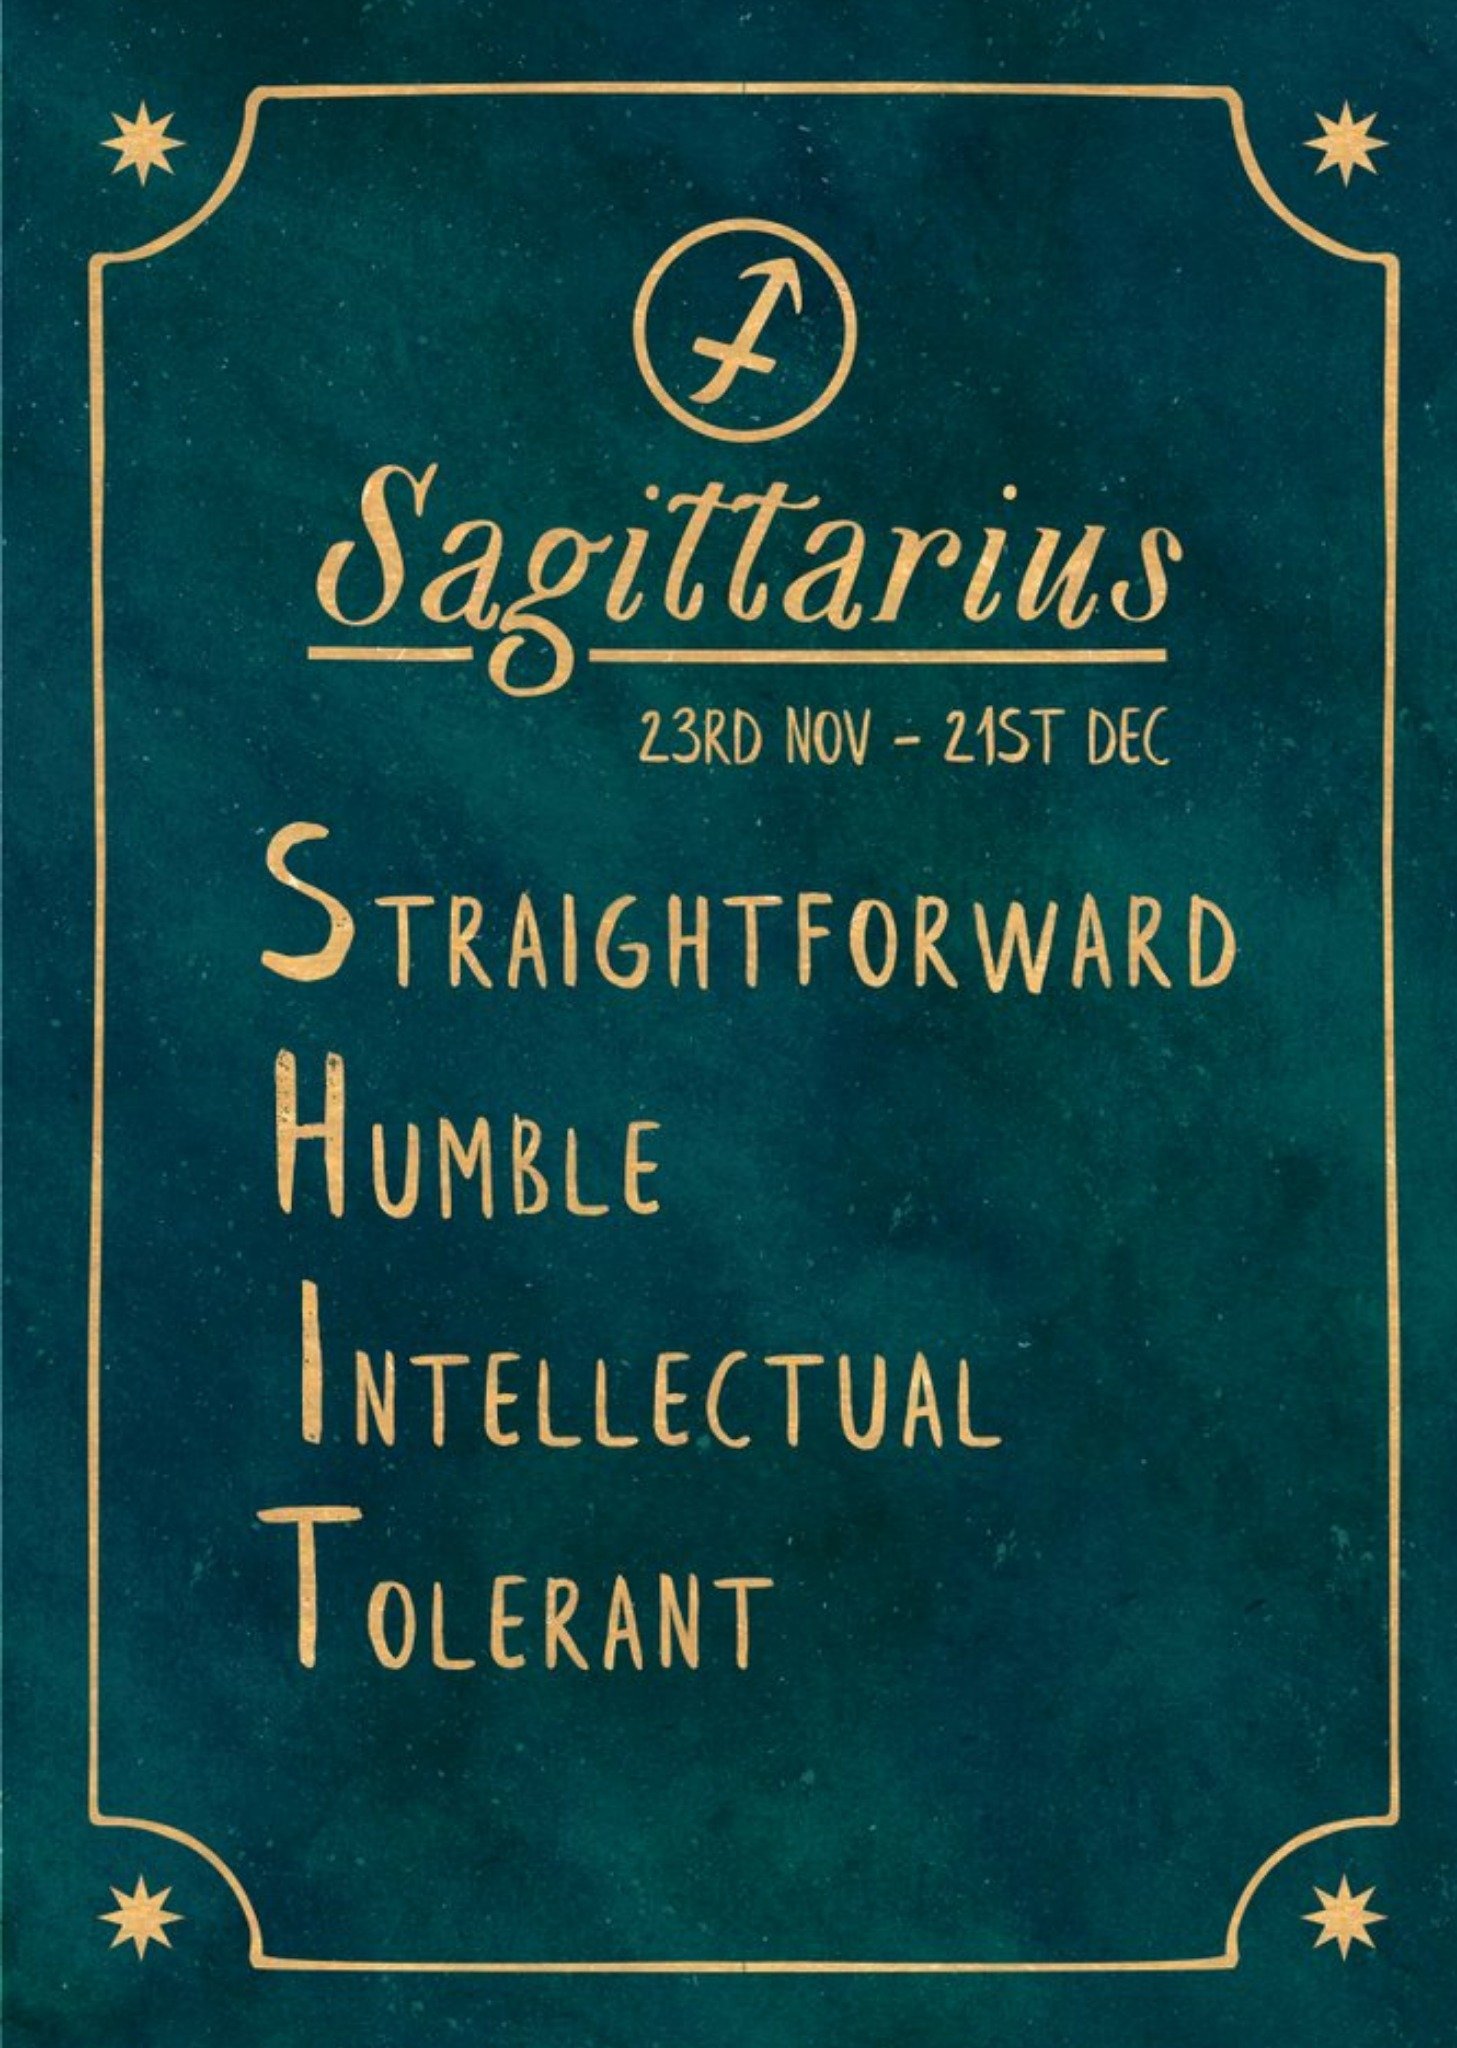 Moonpig Funny Rude Horoscope Birthday Card - Sagittarius Ecard